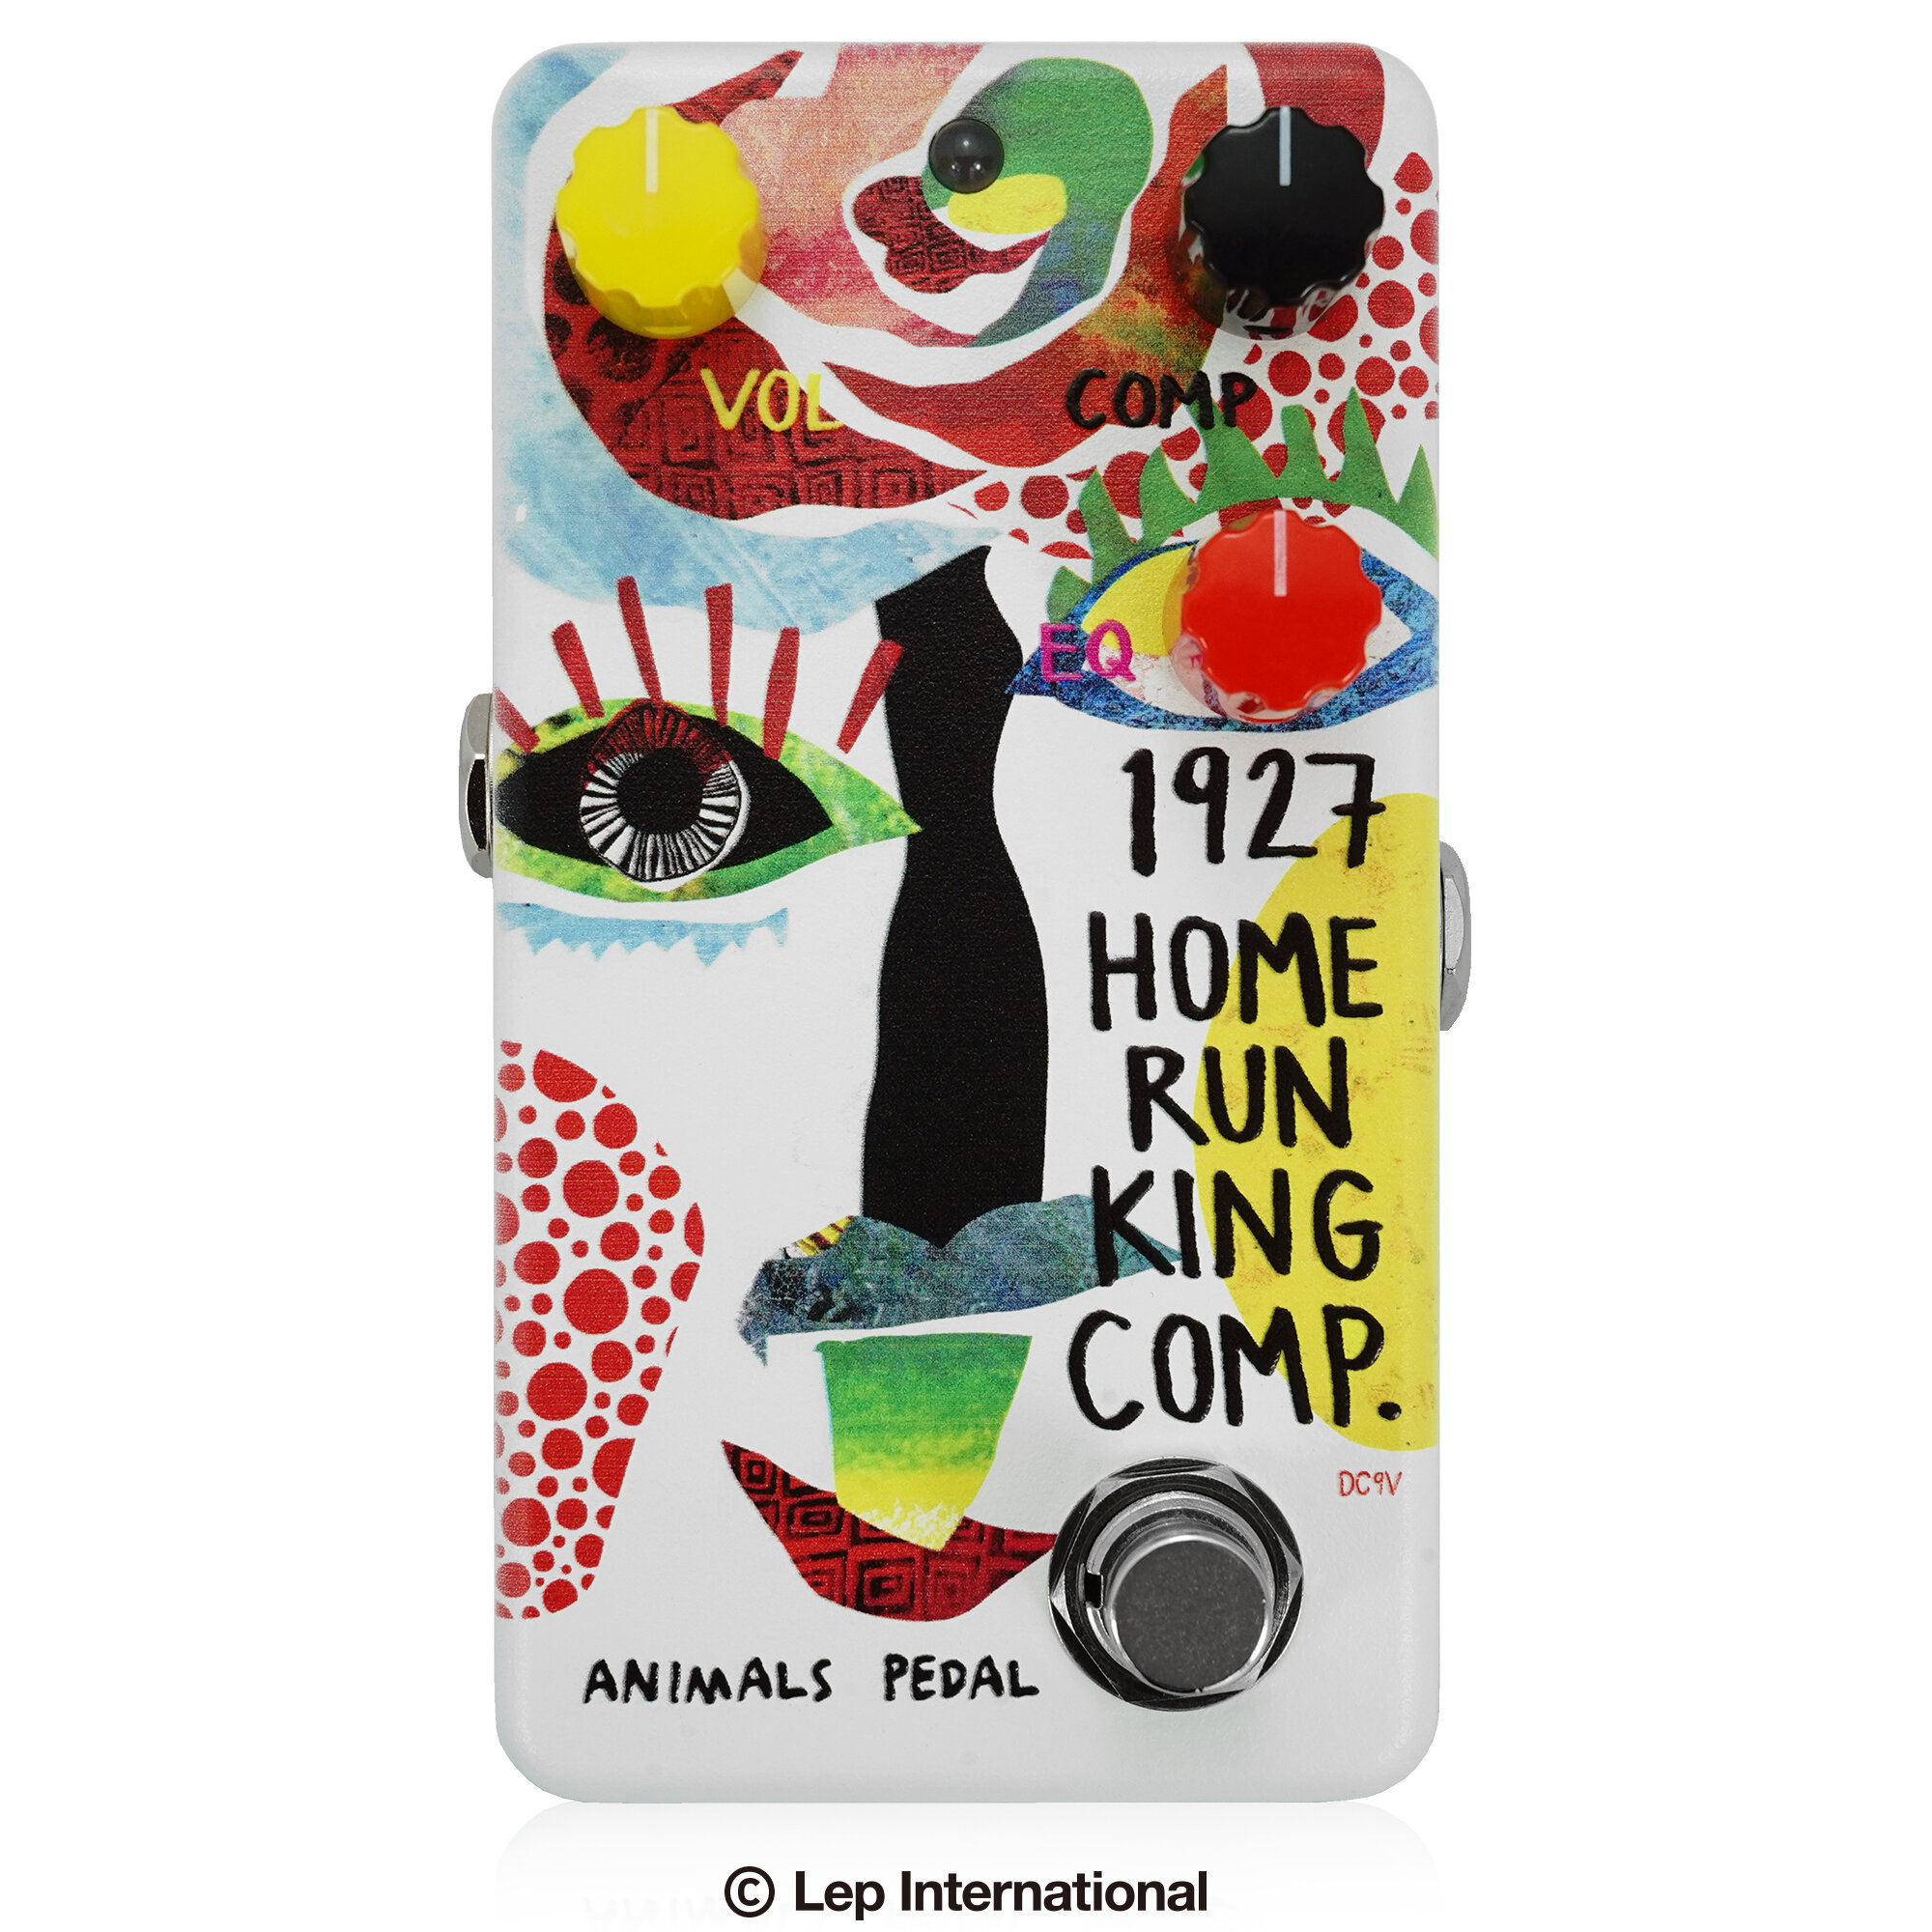 Animals Pedal 1927 HOME RUN KING COMP. - 通販 - gofukuyasan.com